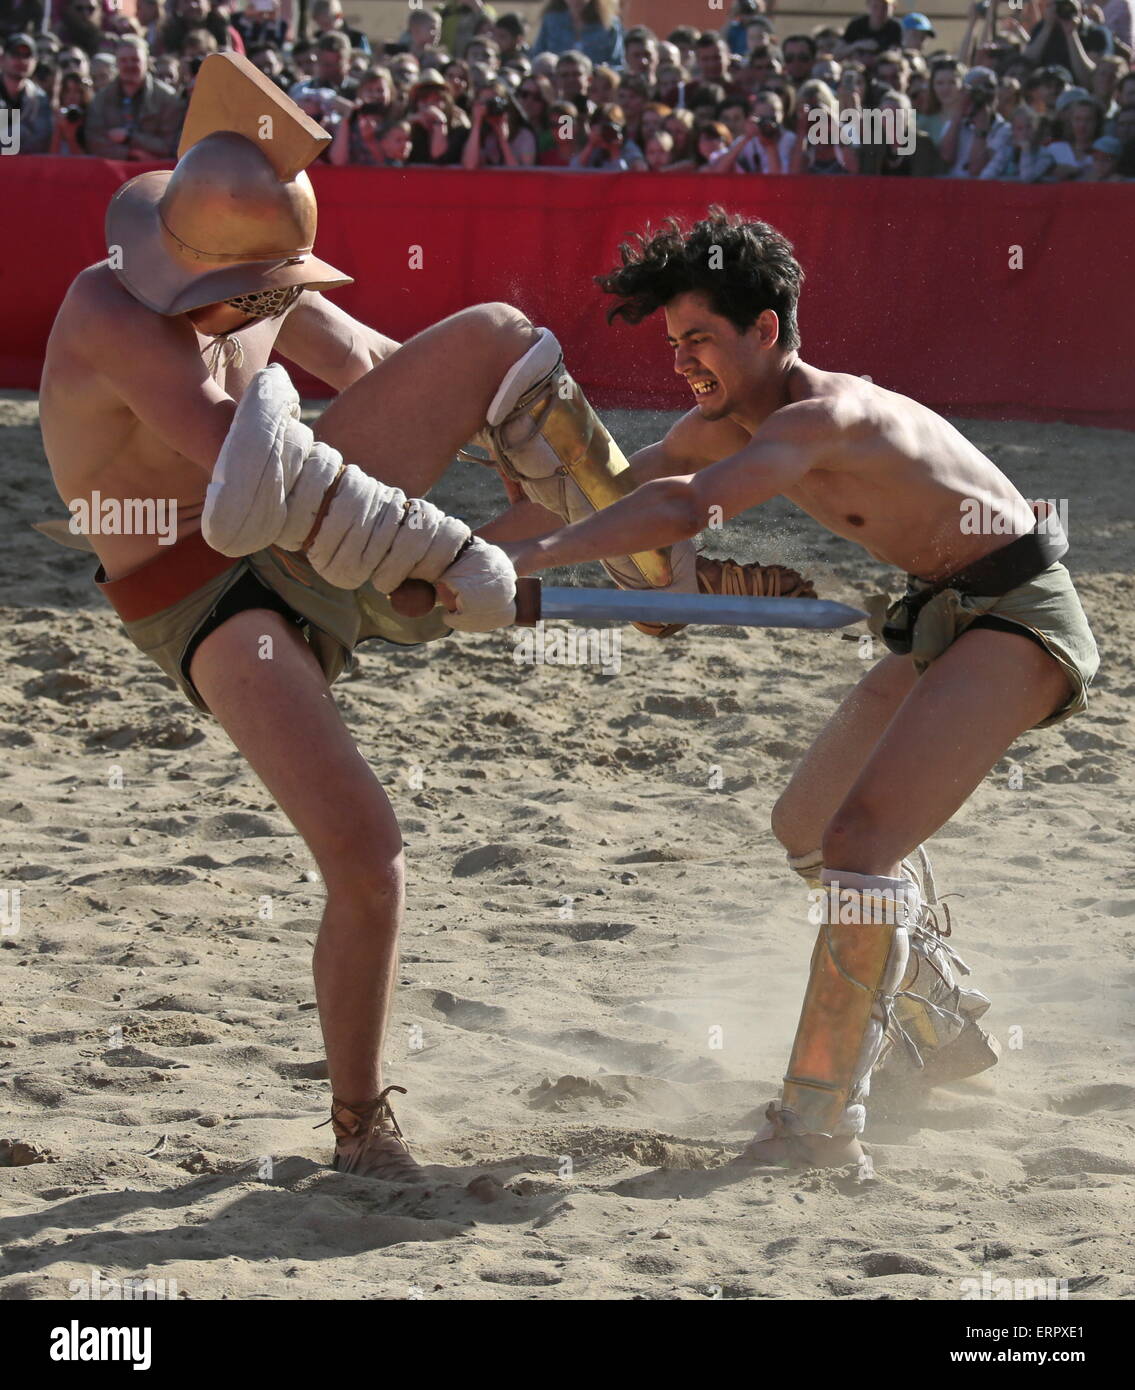 [IMAGE:https://c8.alamy.com/comp/ERPXE1/moscow-russia-6th-june-2015-reenactors-portraying-roman-gladiators-ERPXE1.jpg]